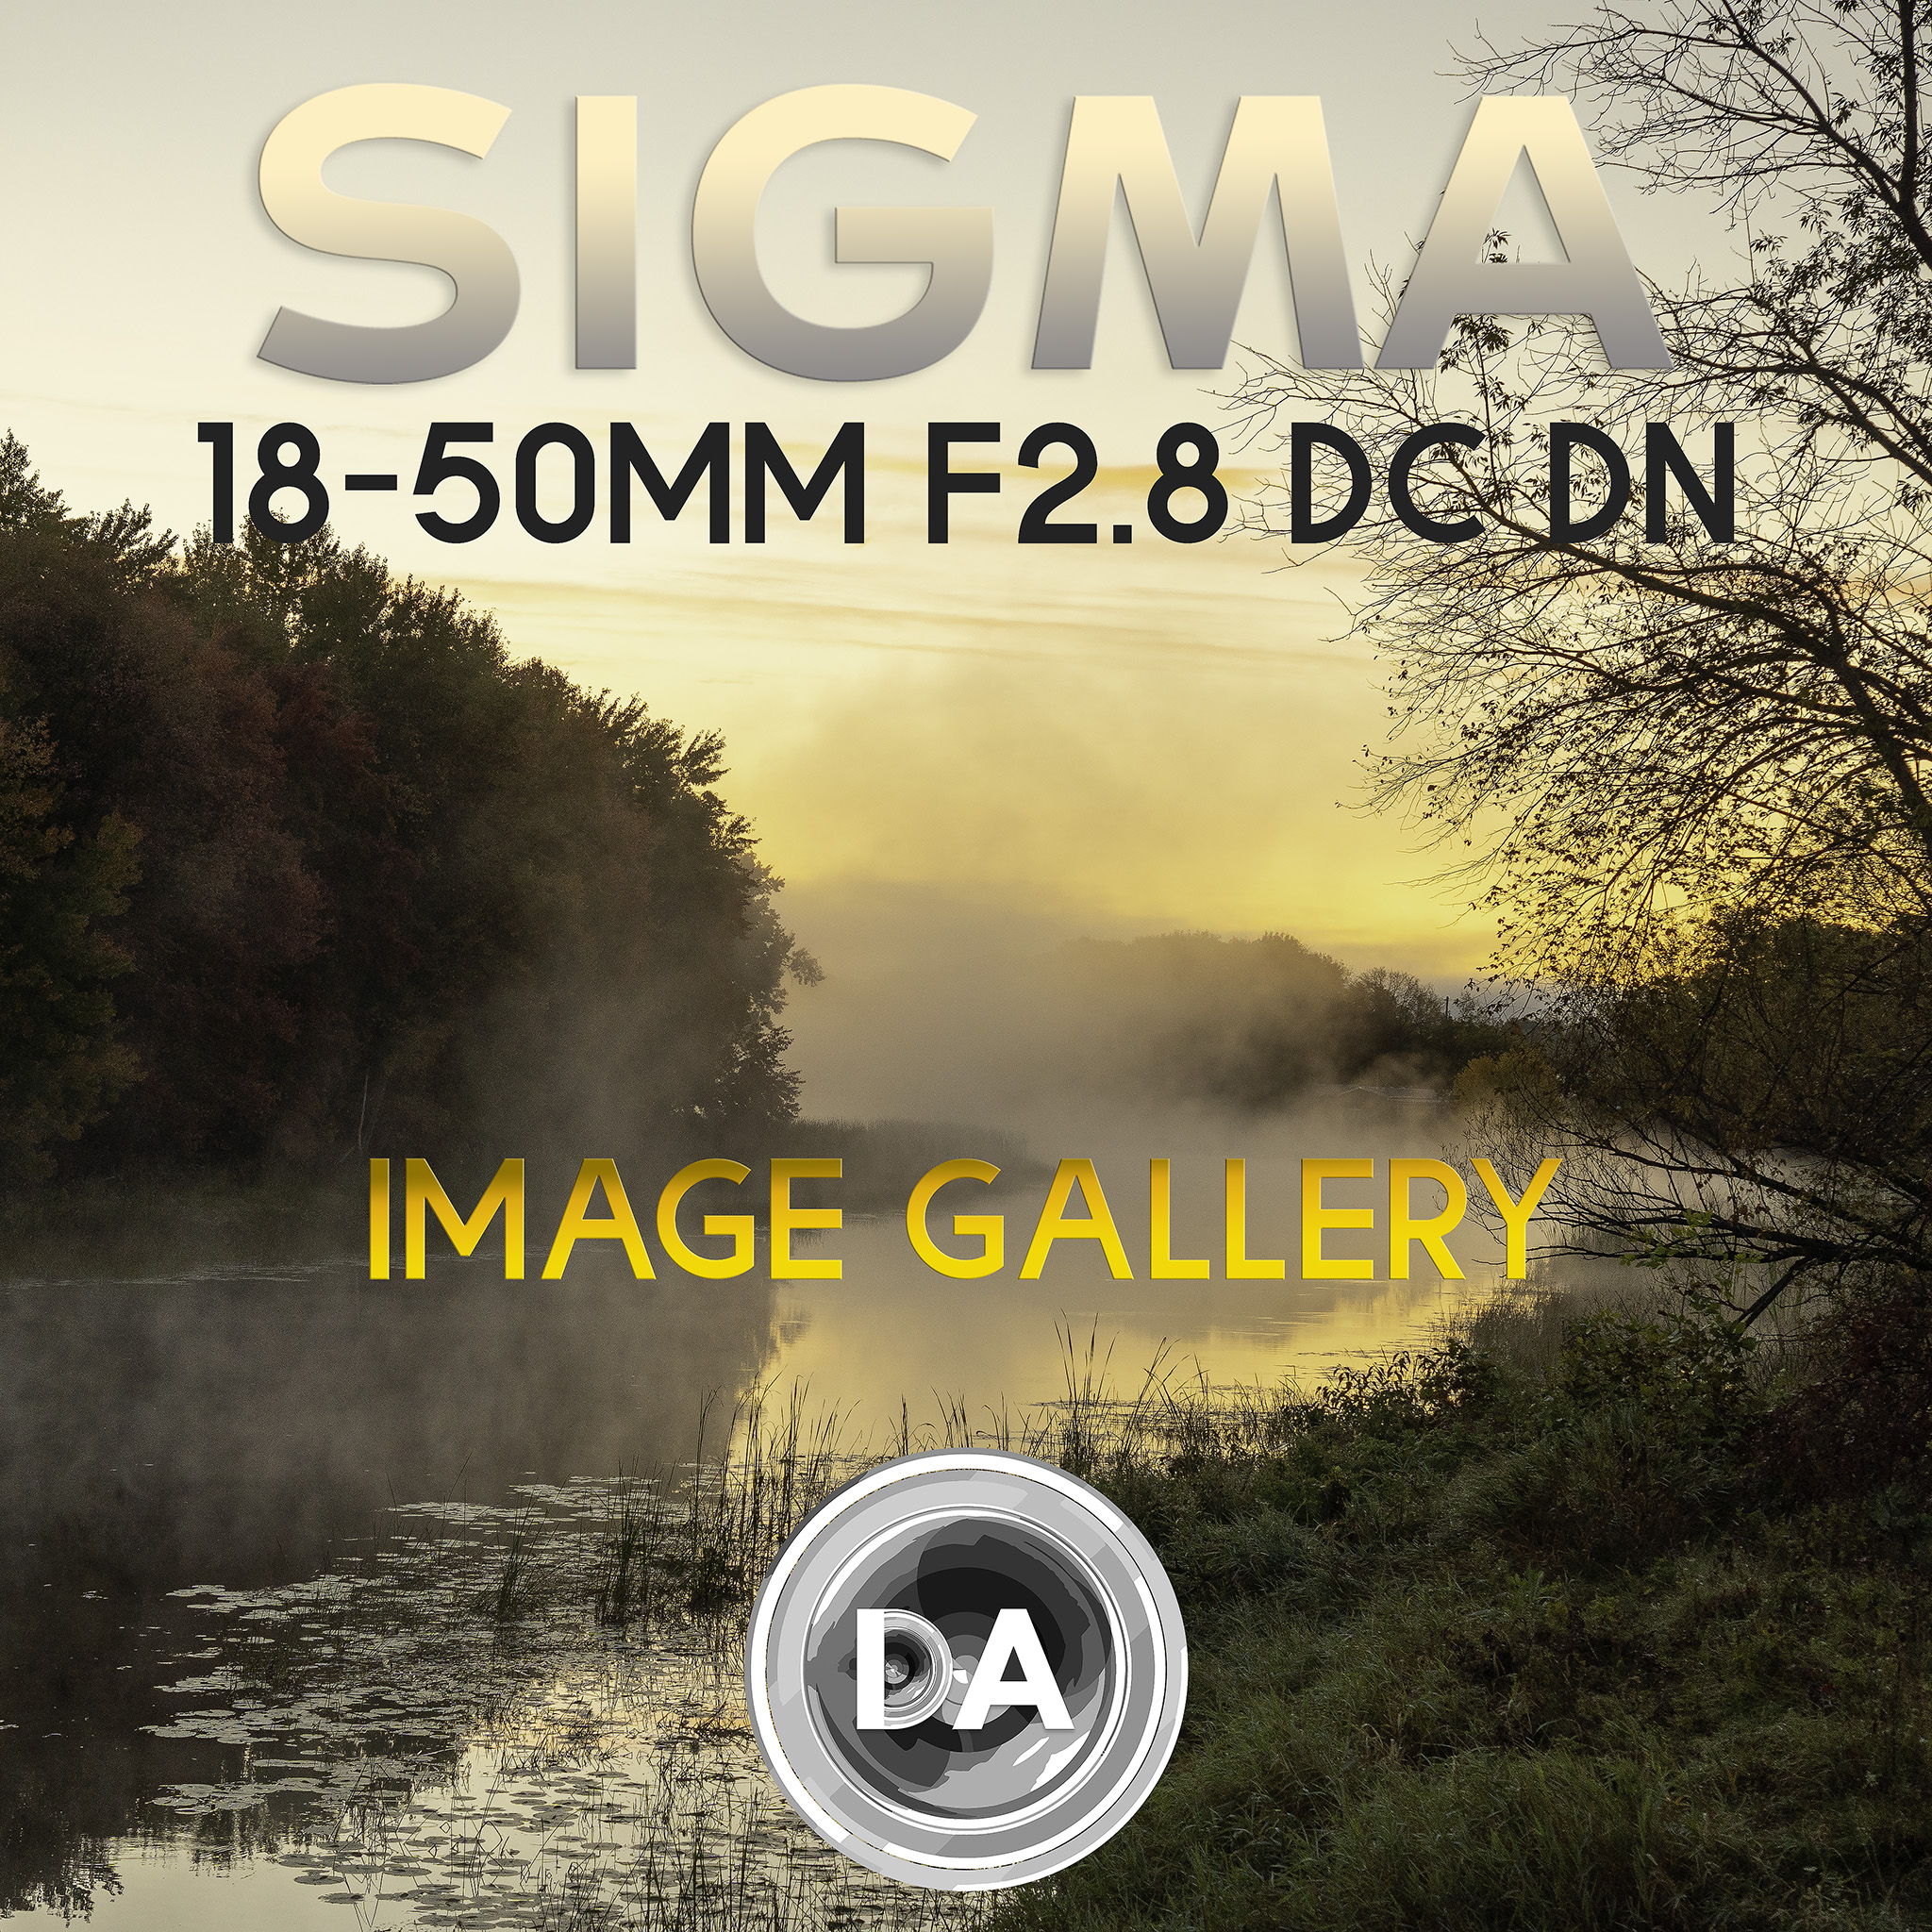 Sigma 18-50mm F2.8 DC DN Image Gallery - DustinAbbott.net